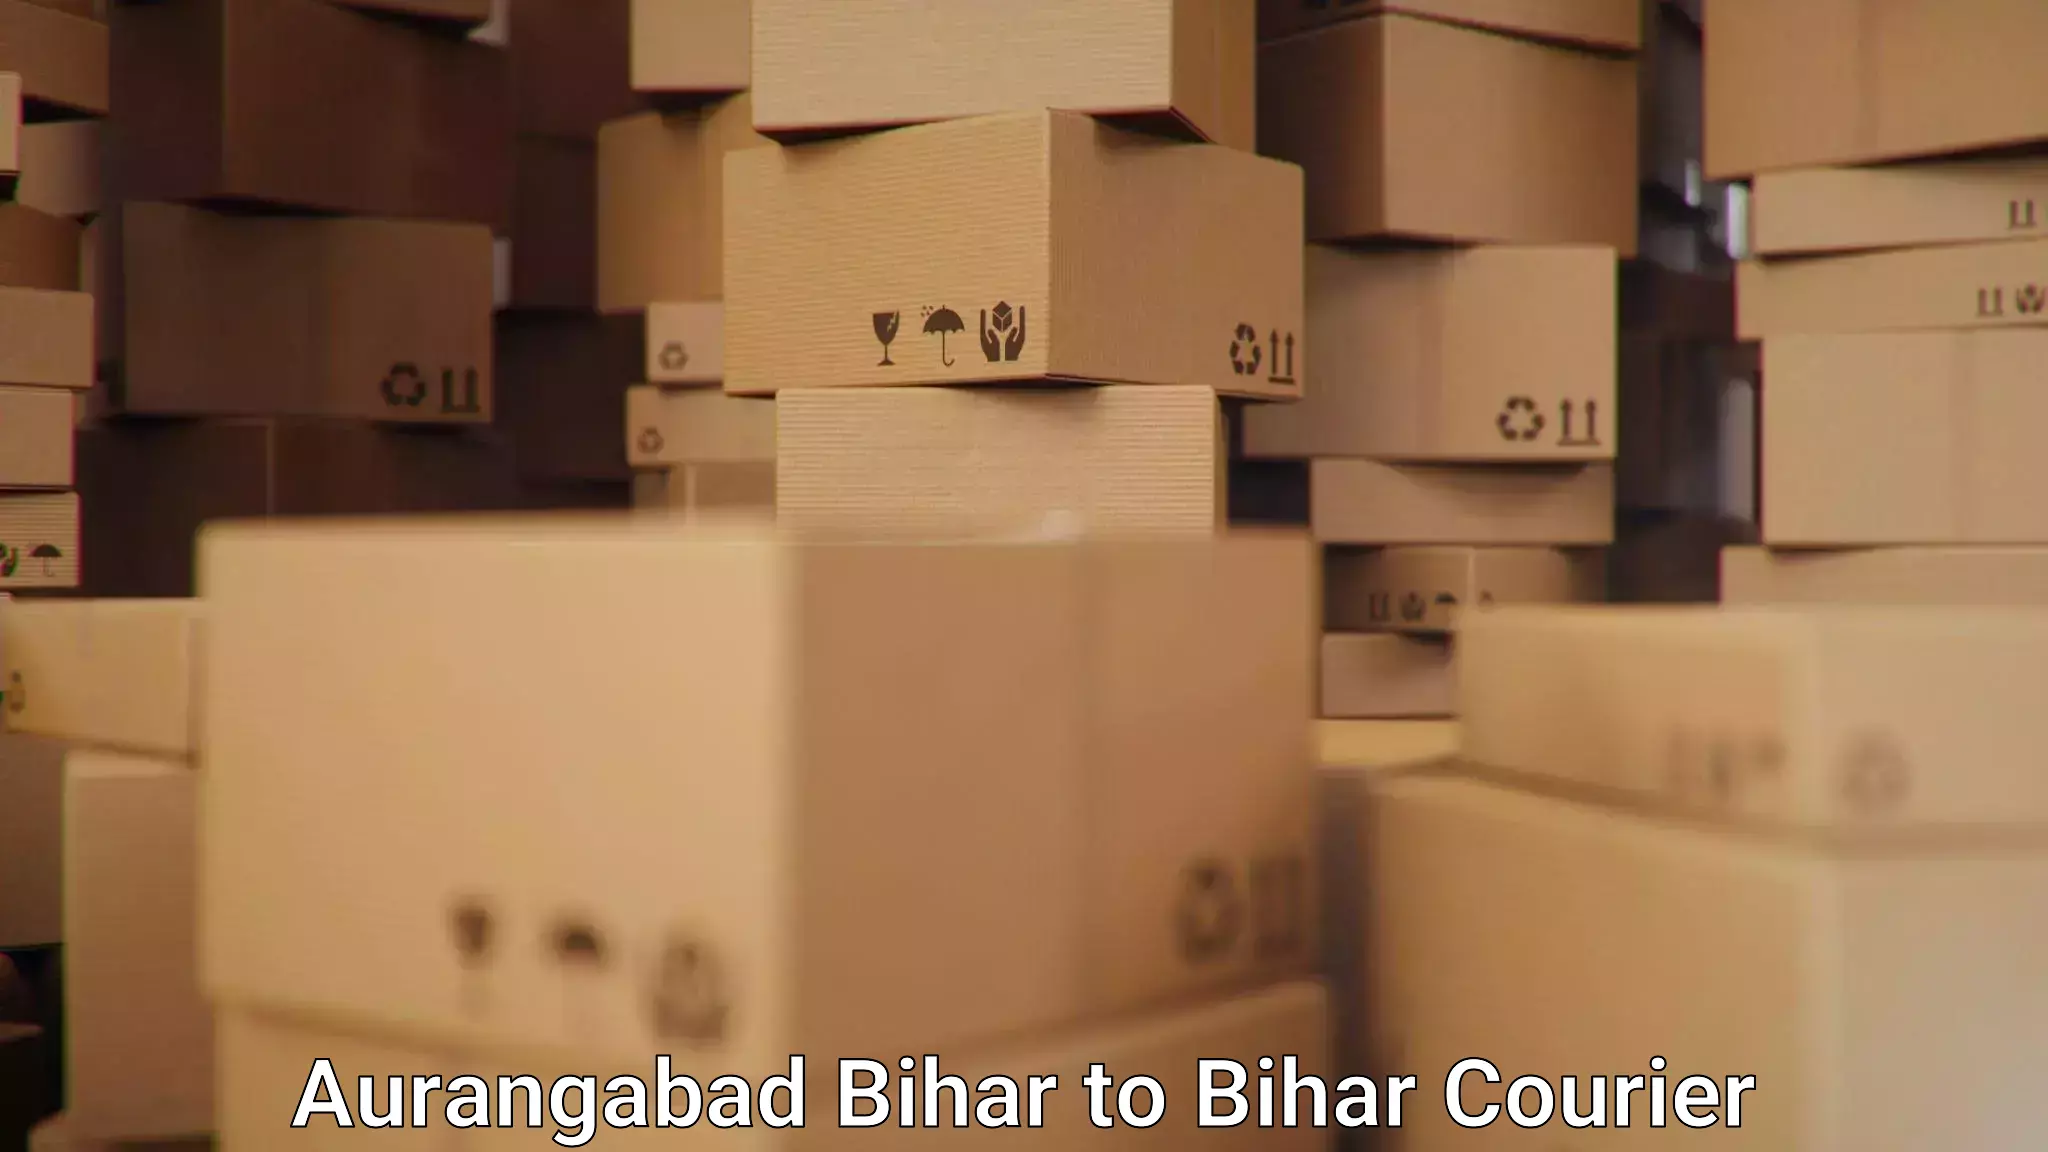 Multi-package shipping Aurangabad Bihar to Bihar